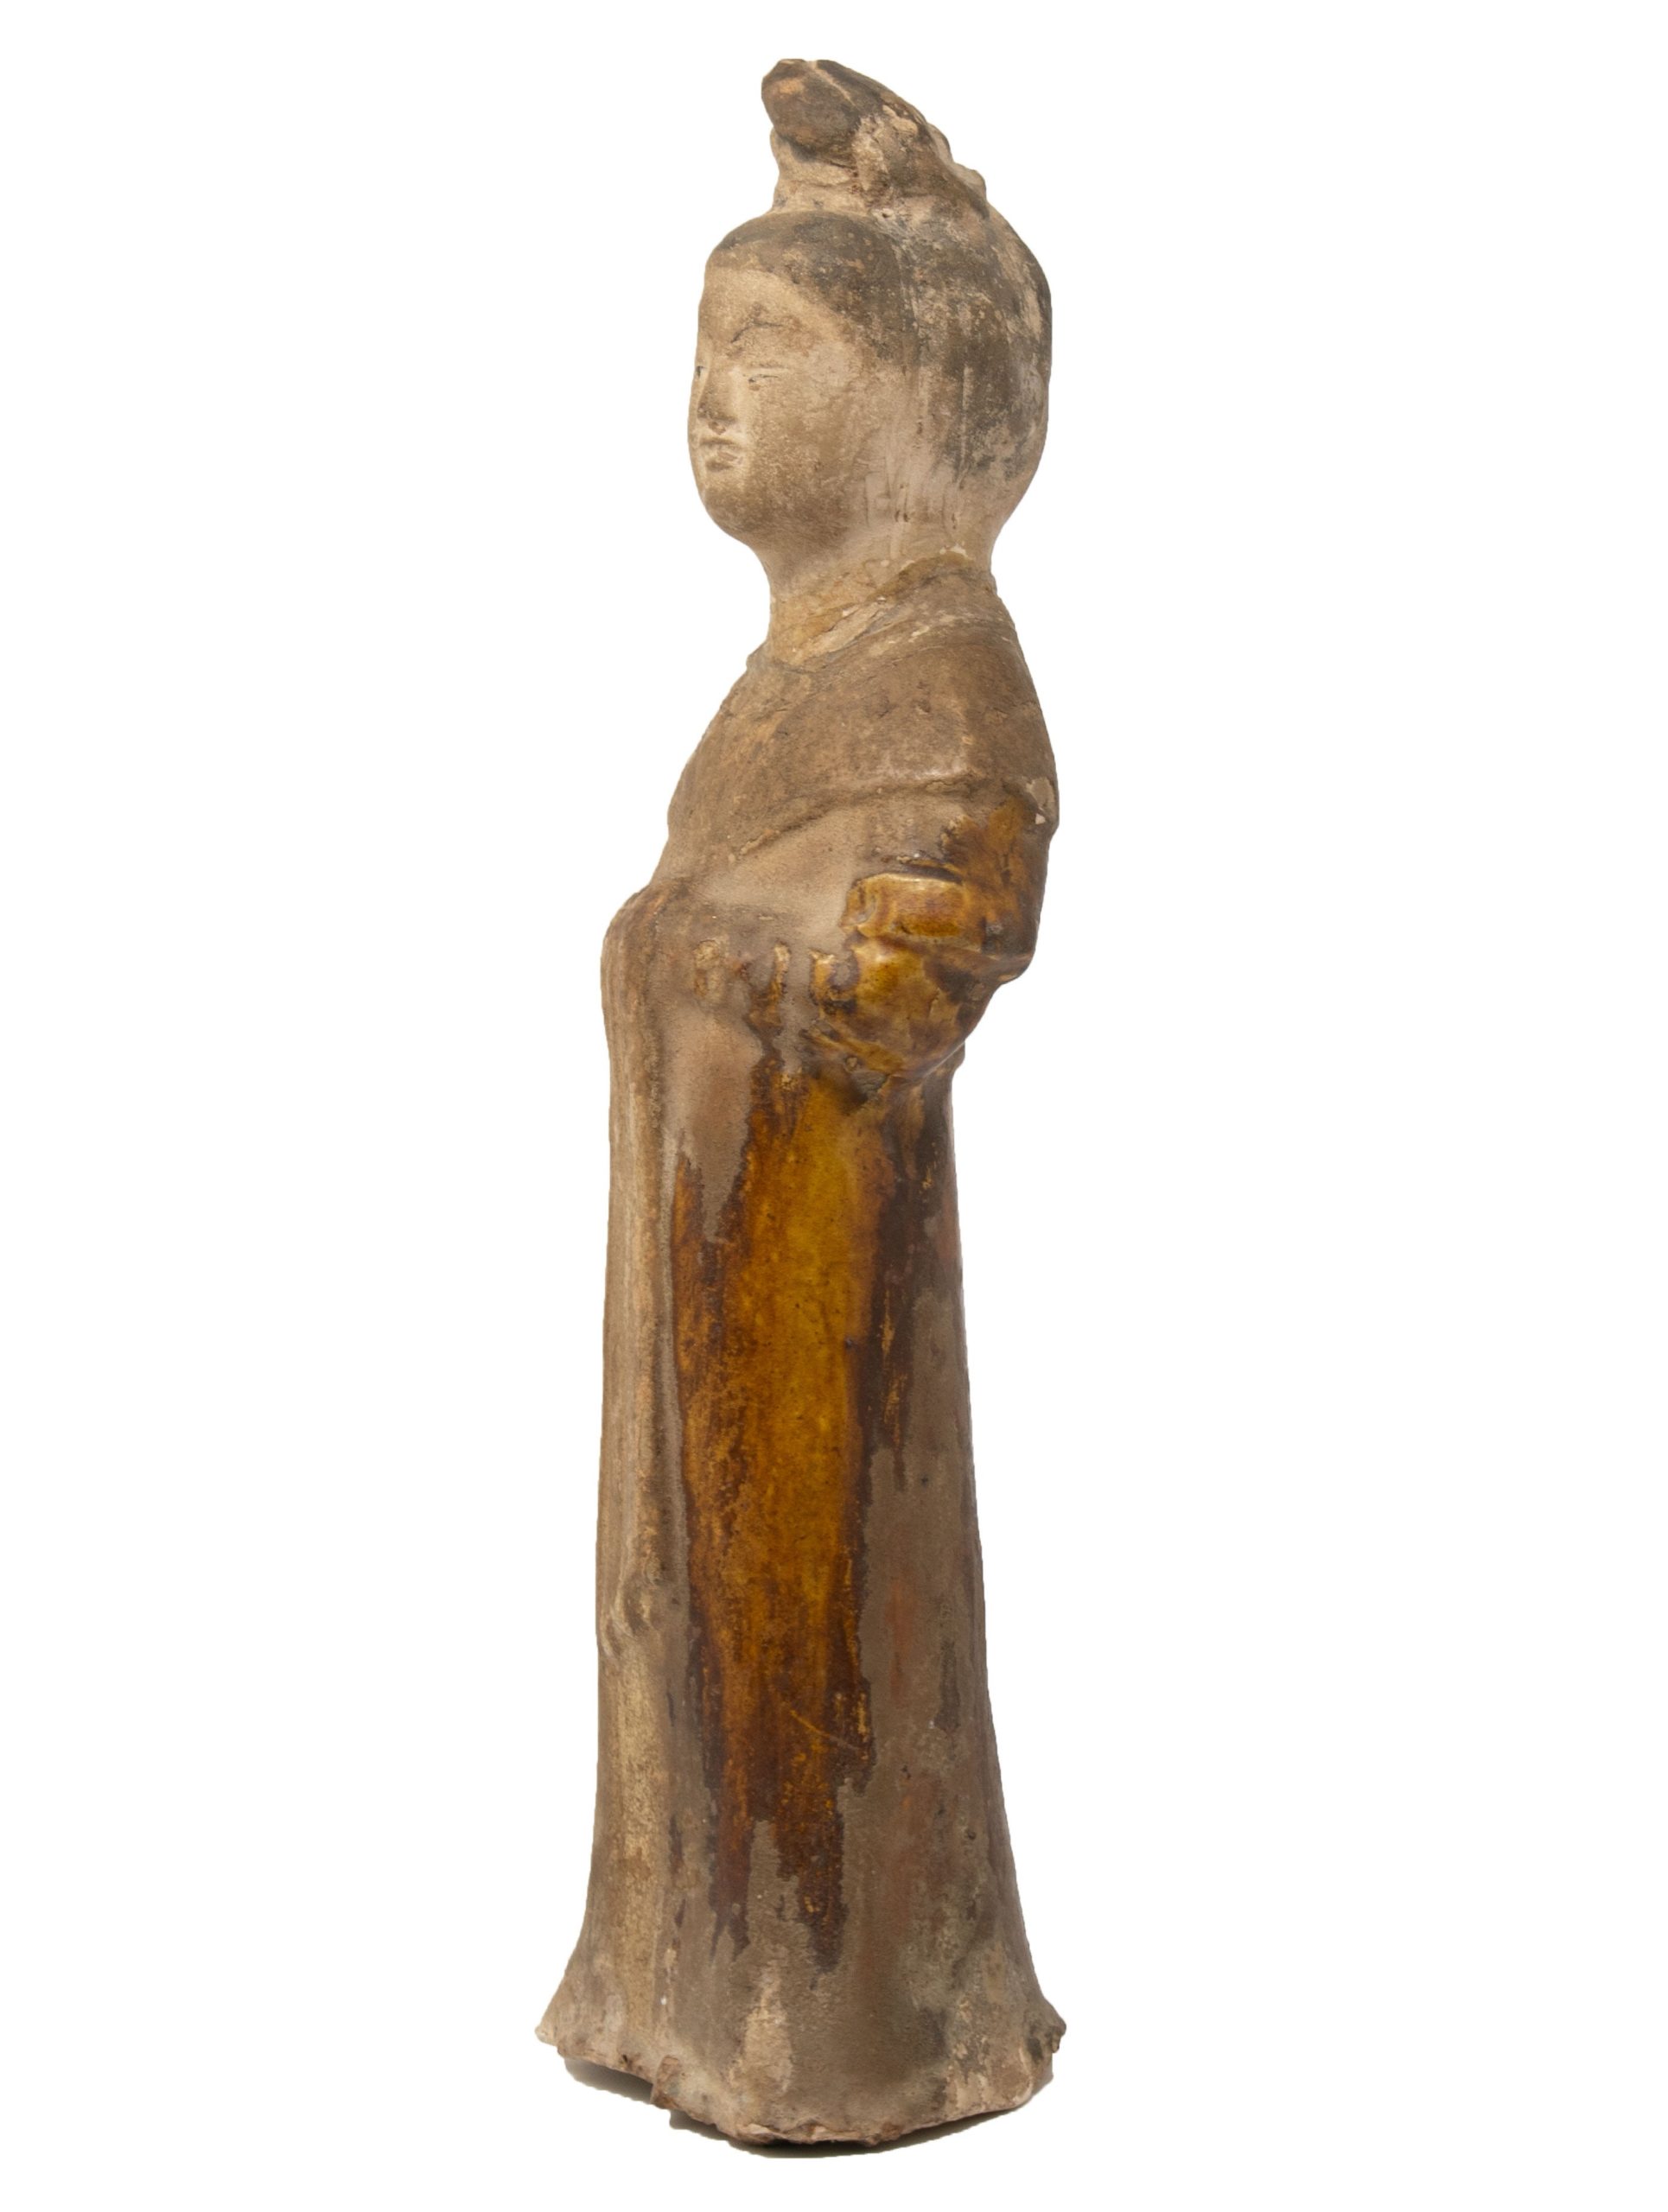 Figura de Cerámica China de una Mujer con Traje Tradicional, del Siglo XVI